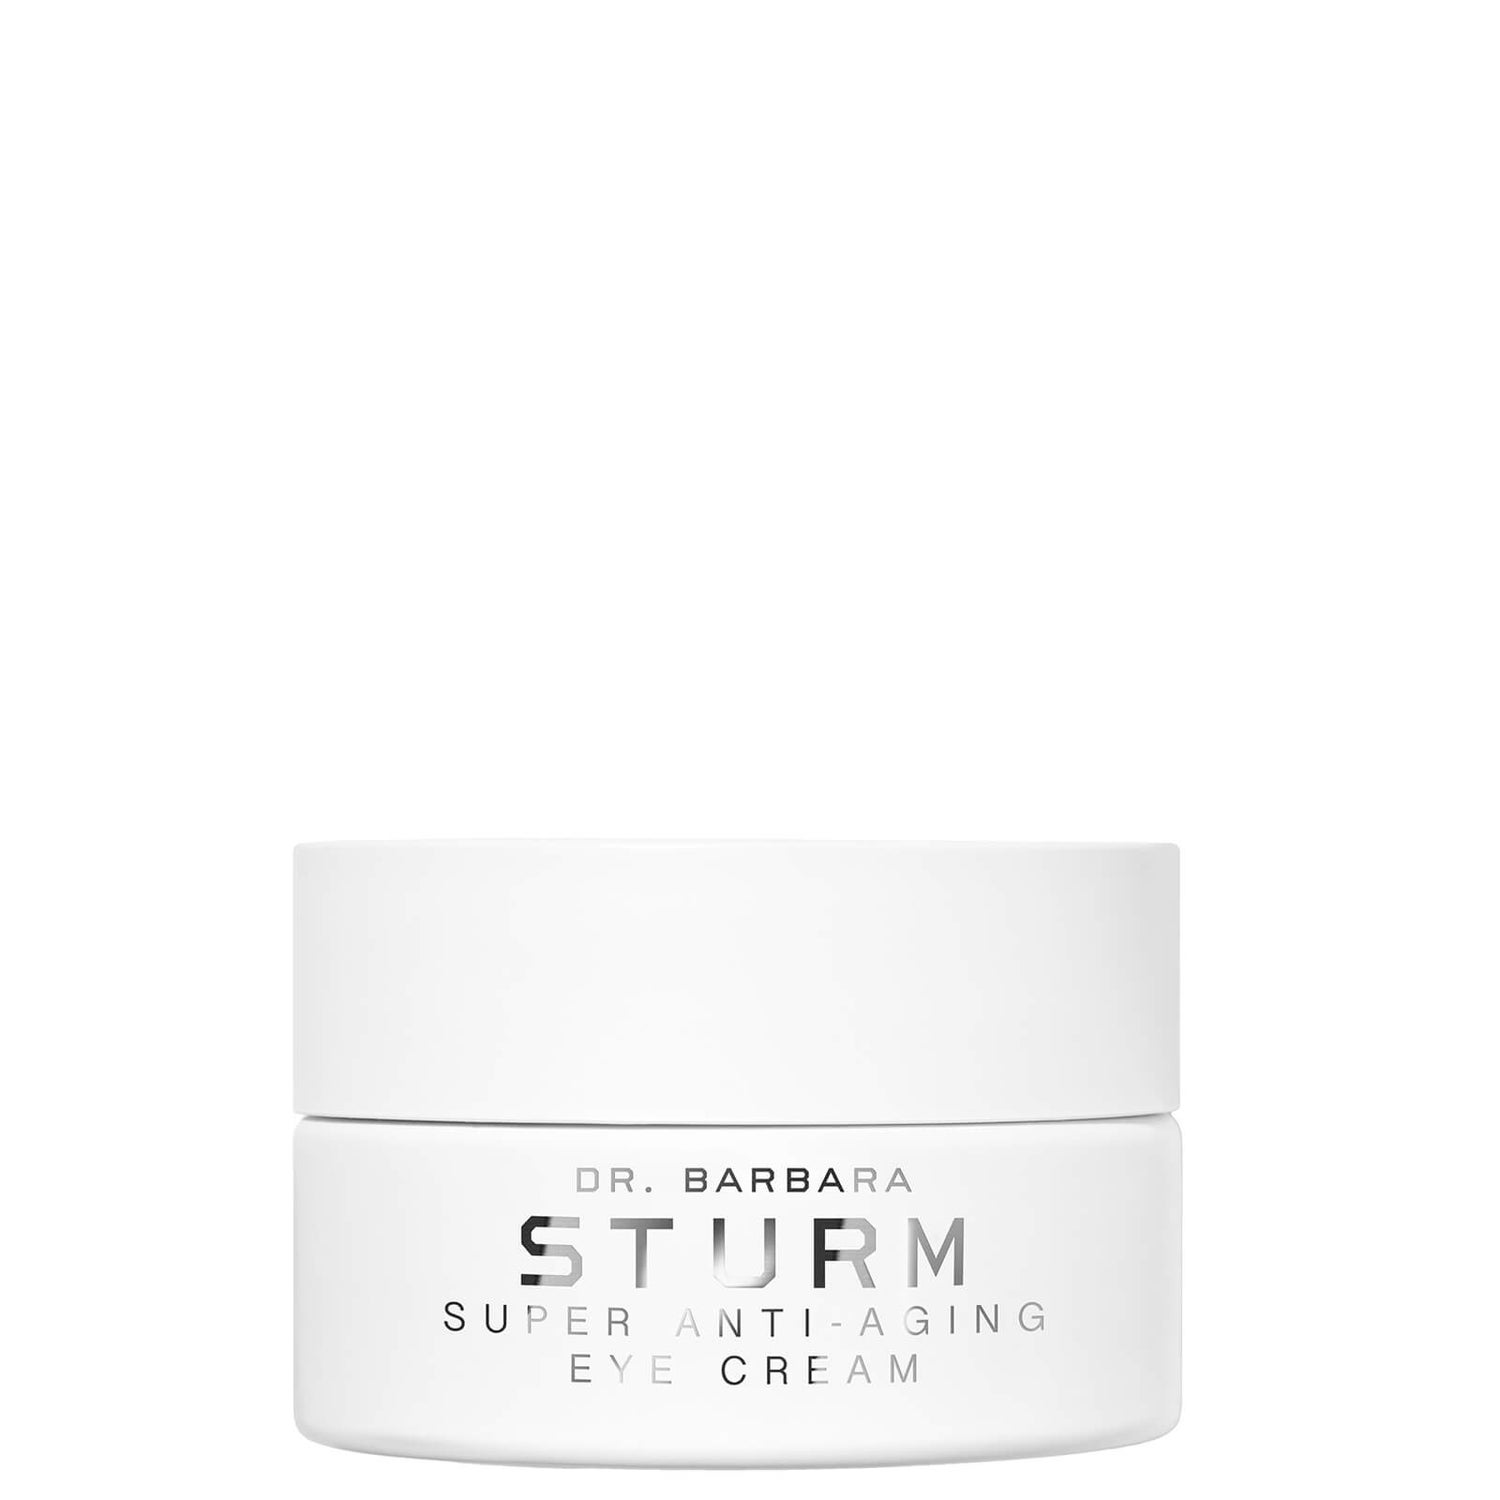 Dr. Barbara Sturm Super Anti-Aging Eye Cream | Cult Beauty